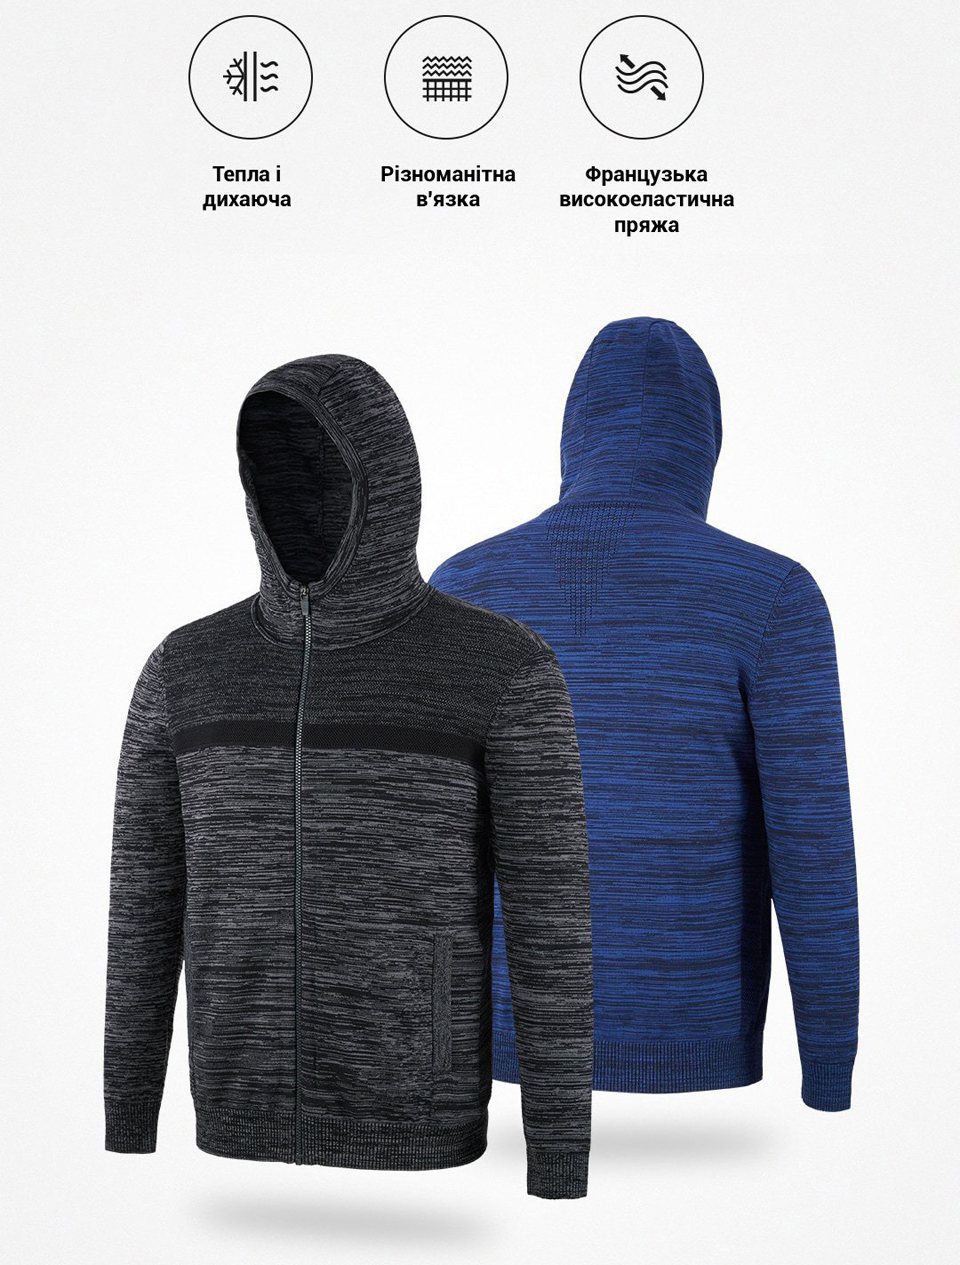 Кофта MITOWN Flying type elastic jacket men's models в двох кольорах